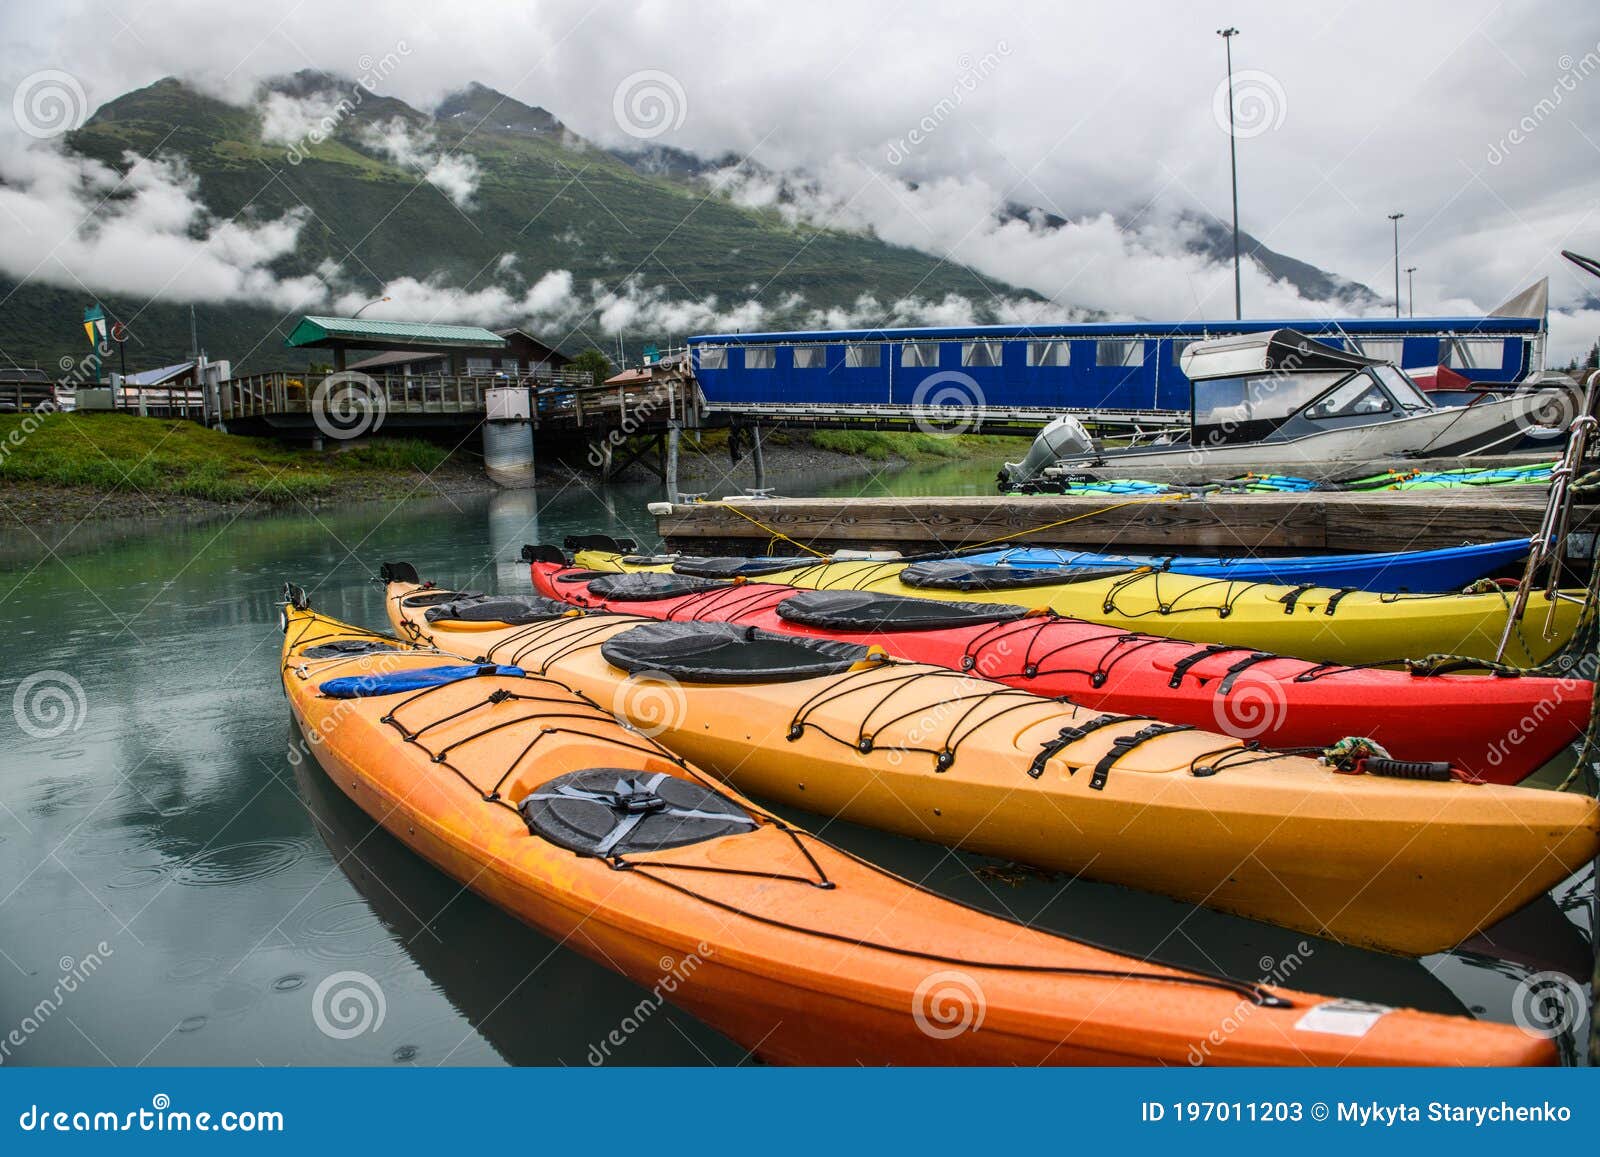 double kayaks parked on the pier on scenic mountain ocean bay in valdez, alaska.